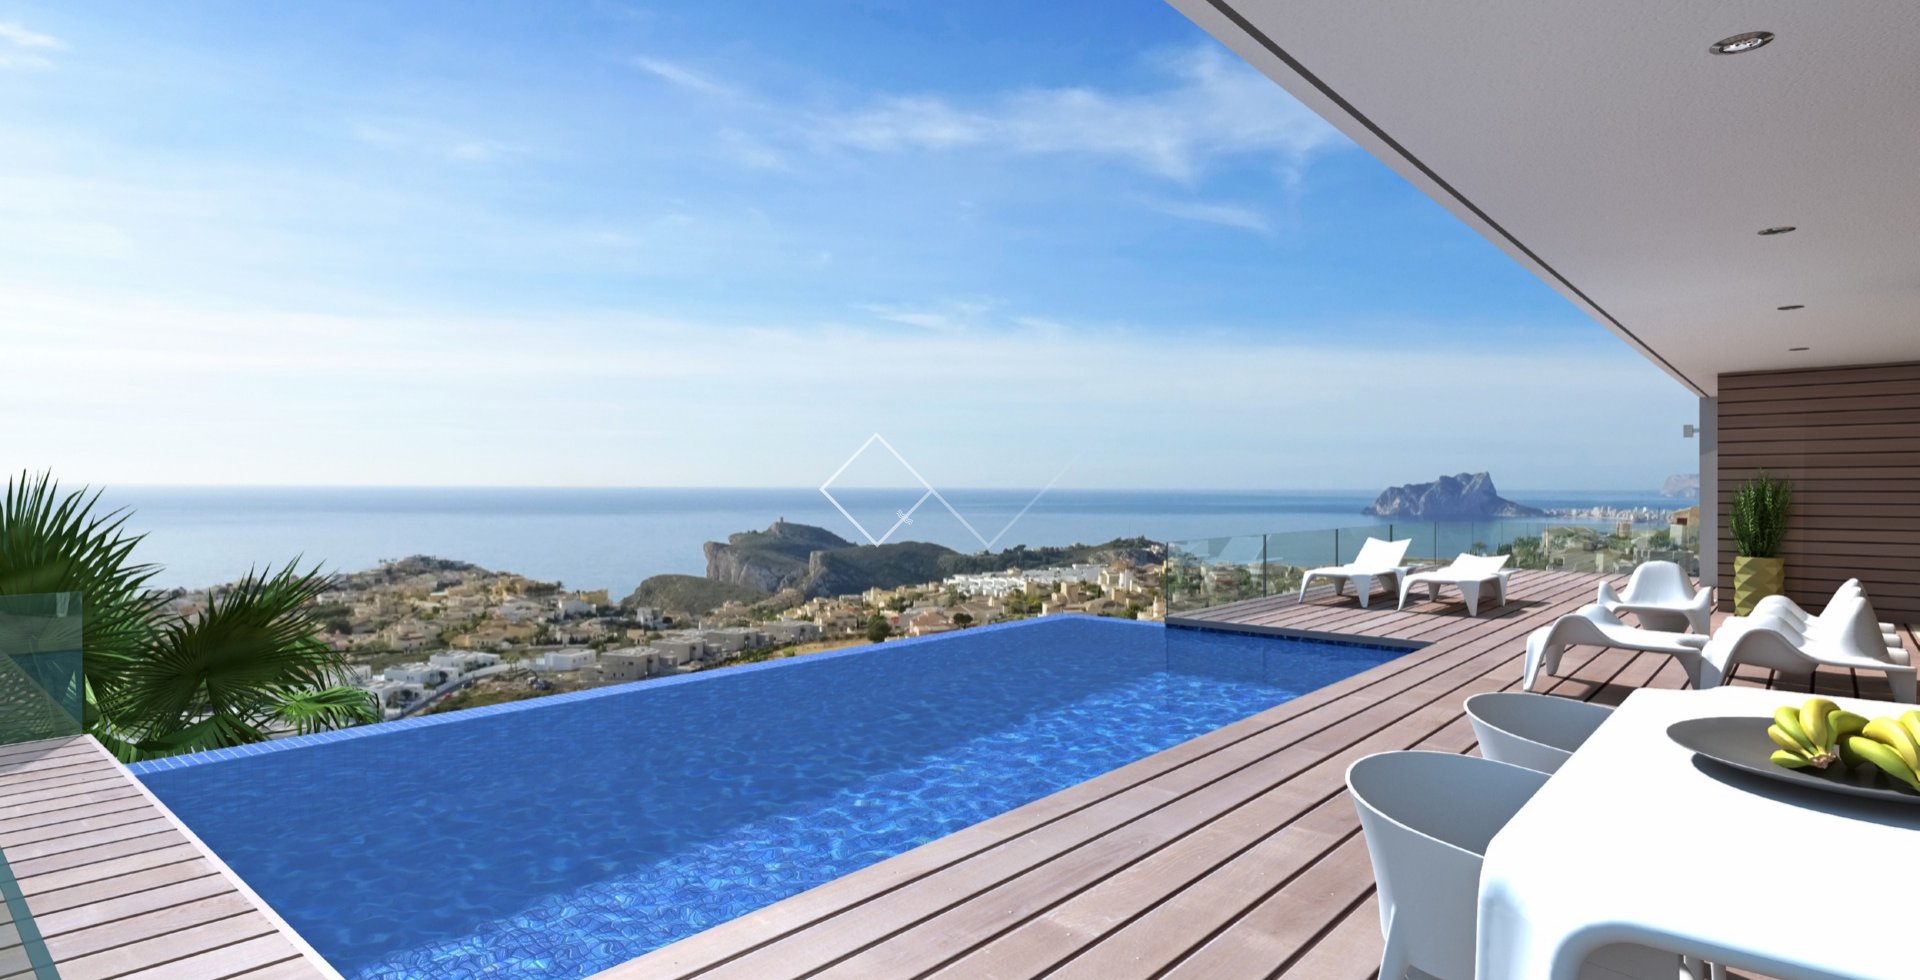 Meerblick vom Pool - Moderne Design-Villa mit Meerblick zu verkaufen in Benitachell